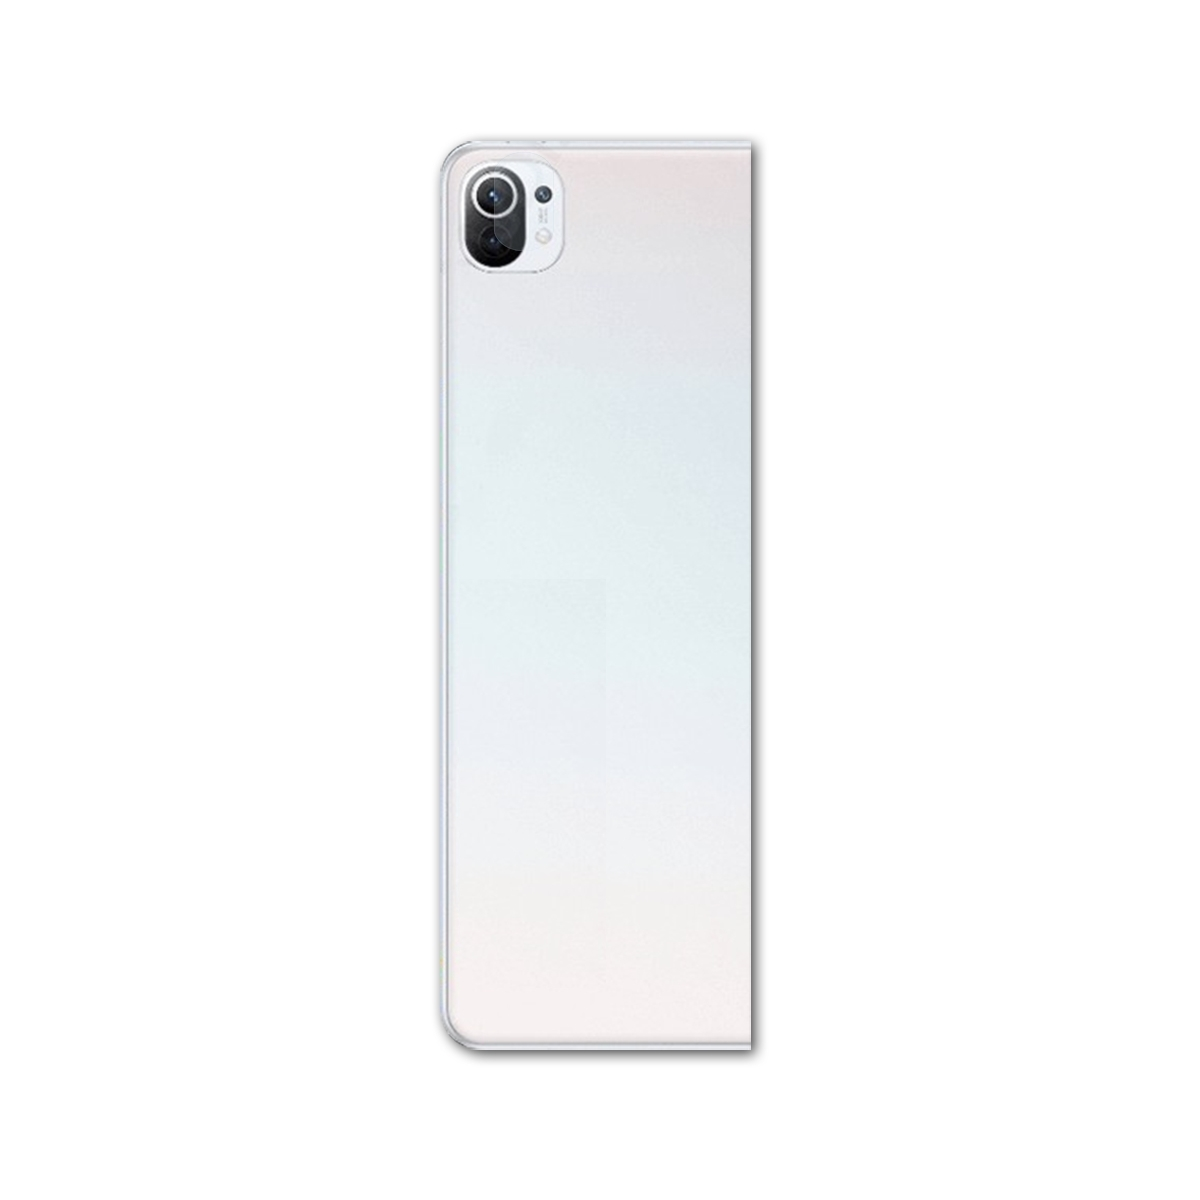 5 Displayschutz(für Lens) ATFOLIX 2x Mi FX-Clear Pad Xiaomi